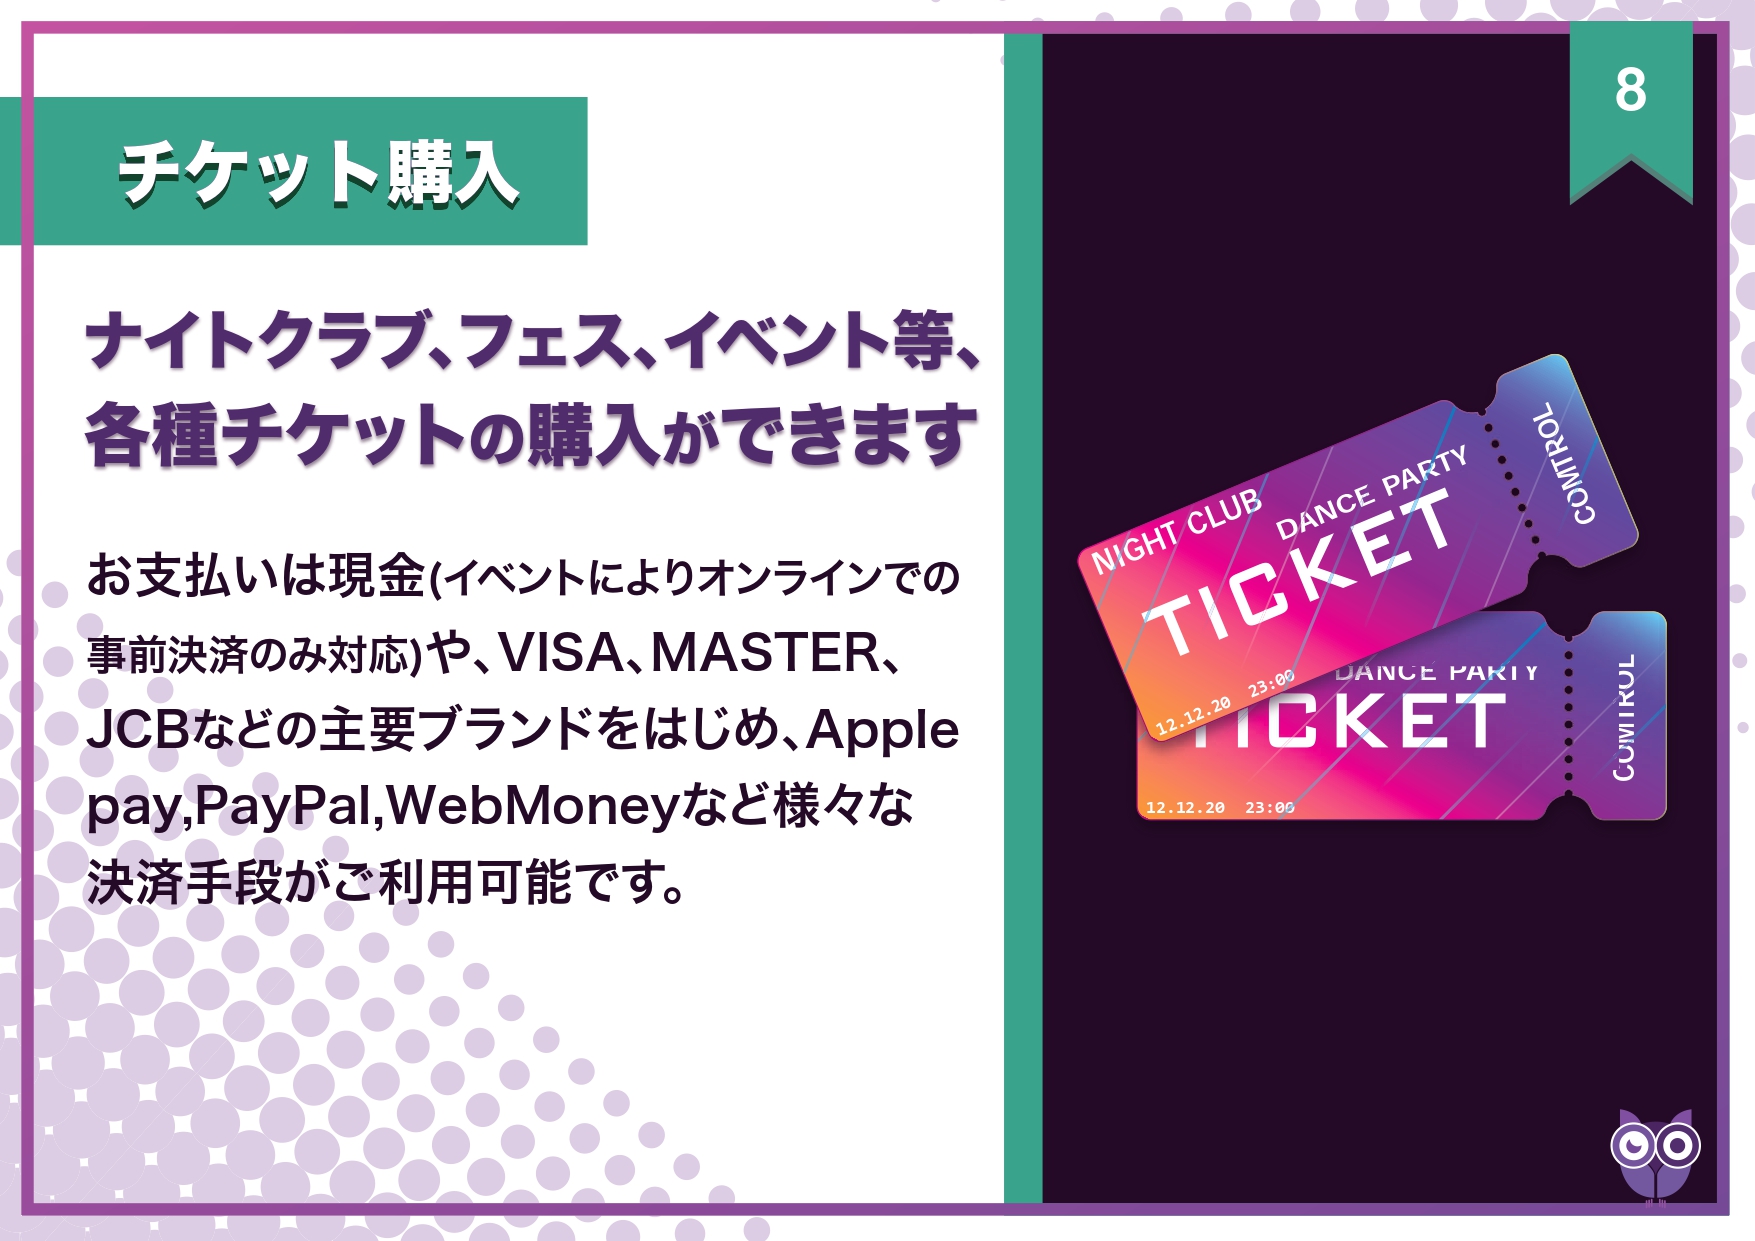 JP NIGHTアプリ チケット購入